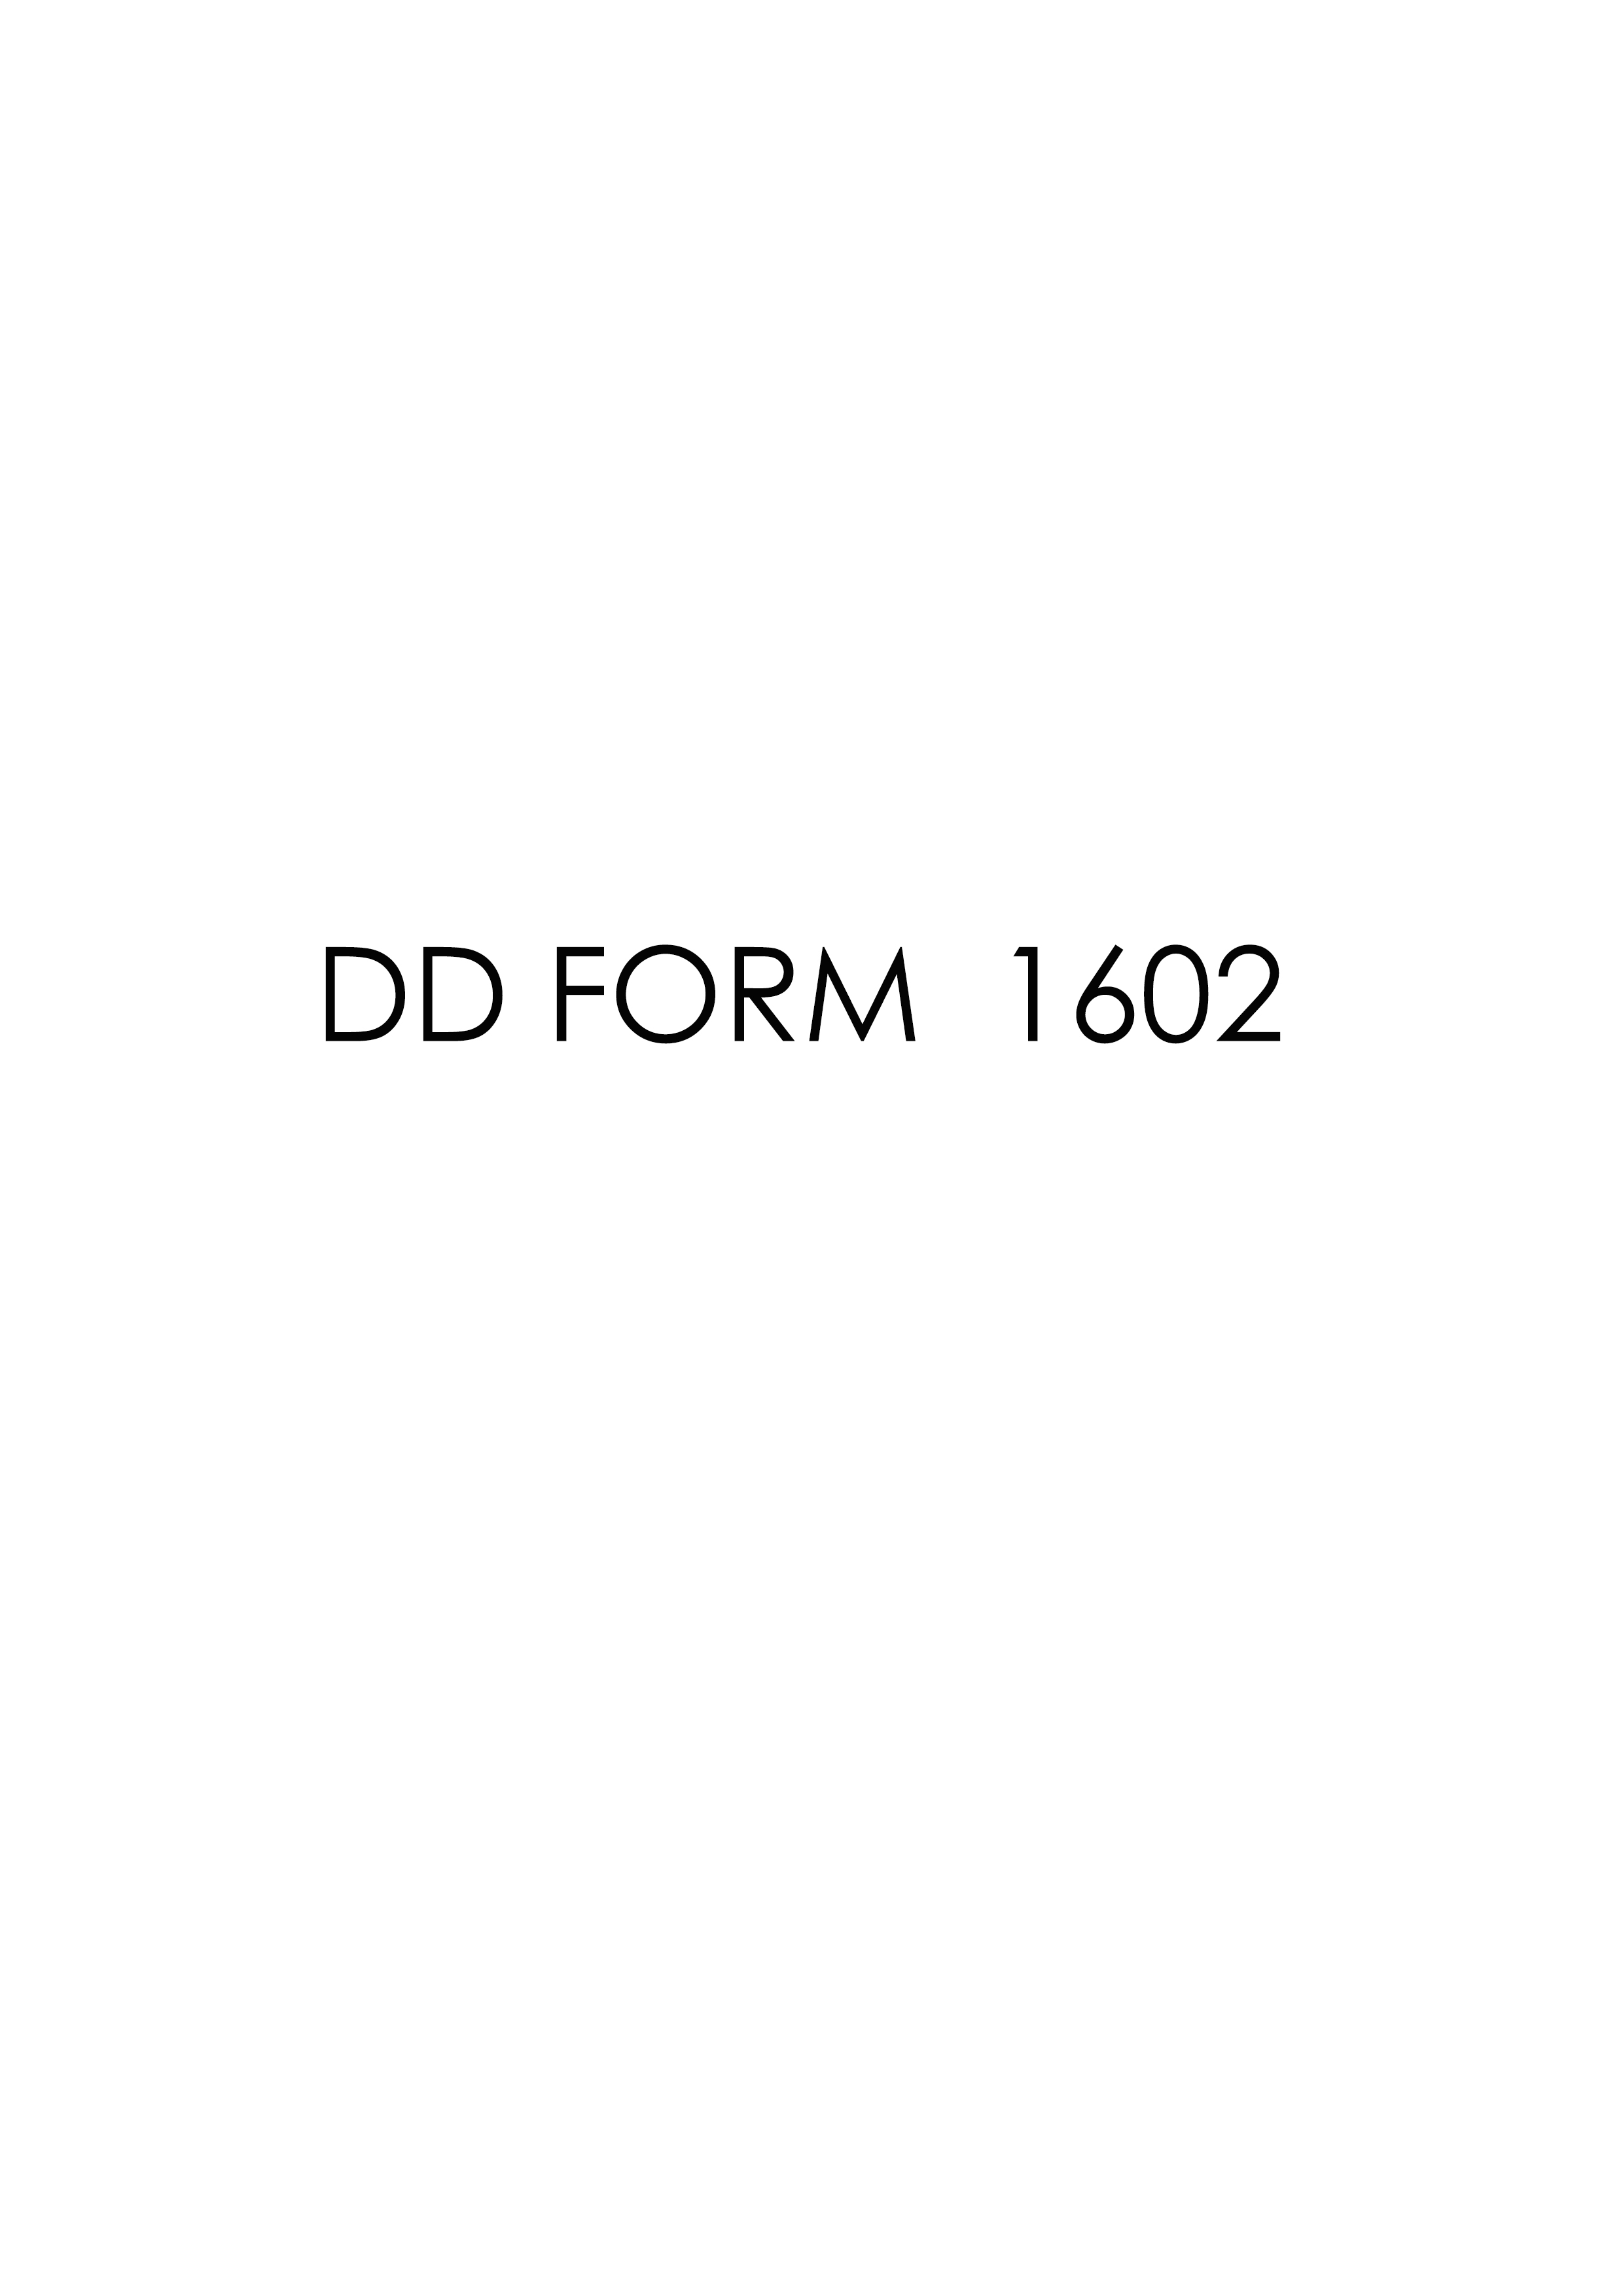 Download dd form 1602